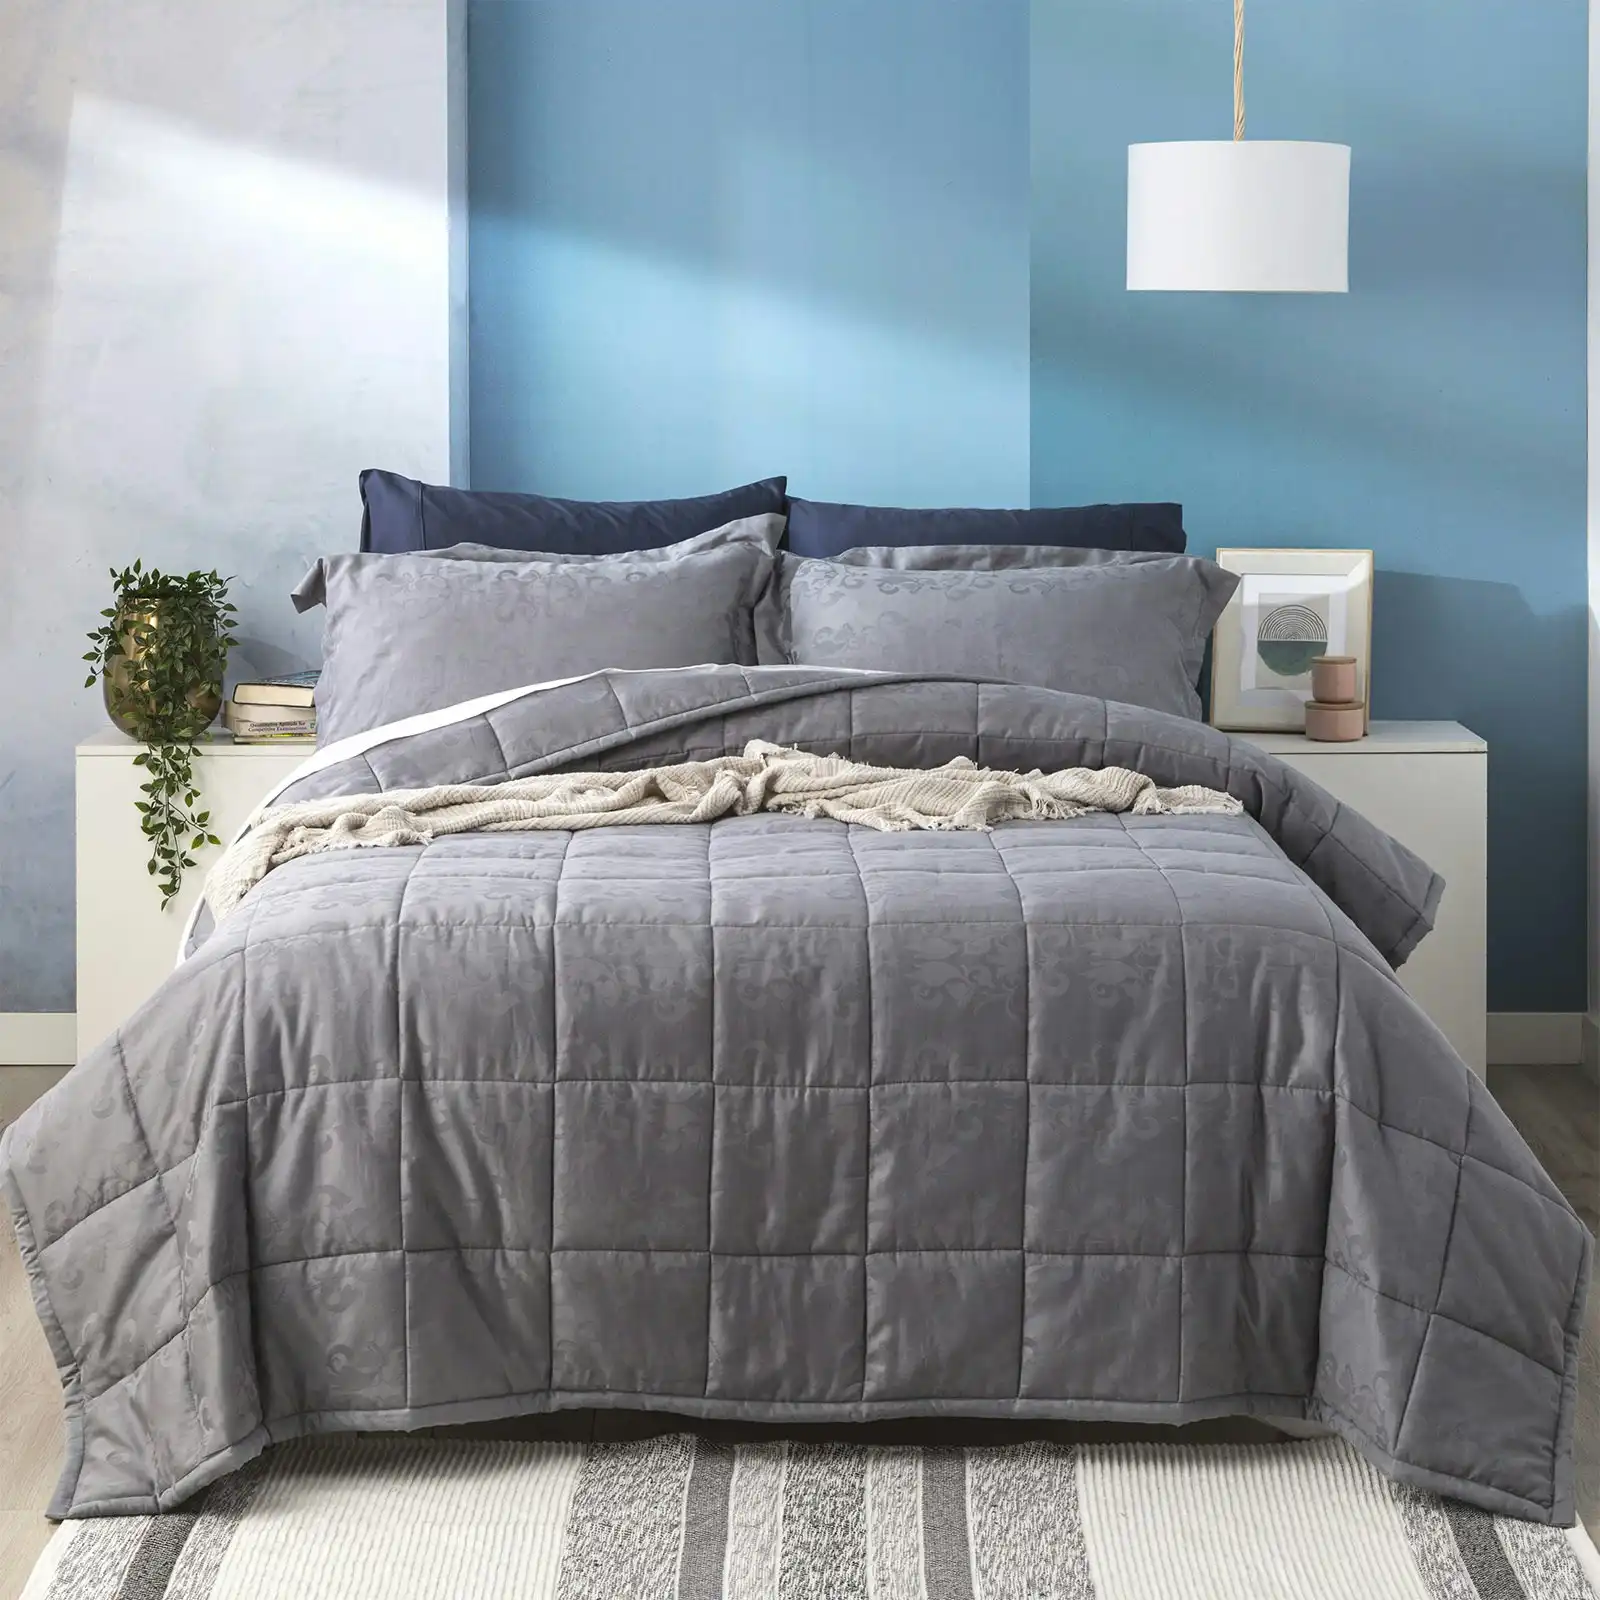 Ddecor Home Paisley Queen Bed Comforter Set 500TC Cotton Jacquard Bedding Slate